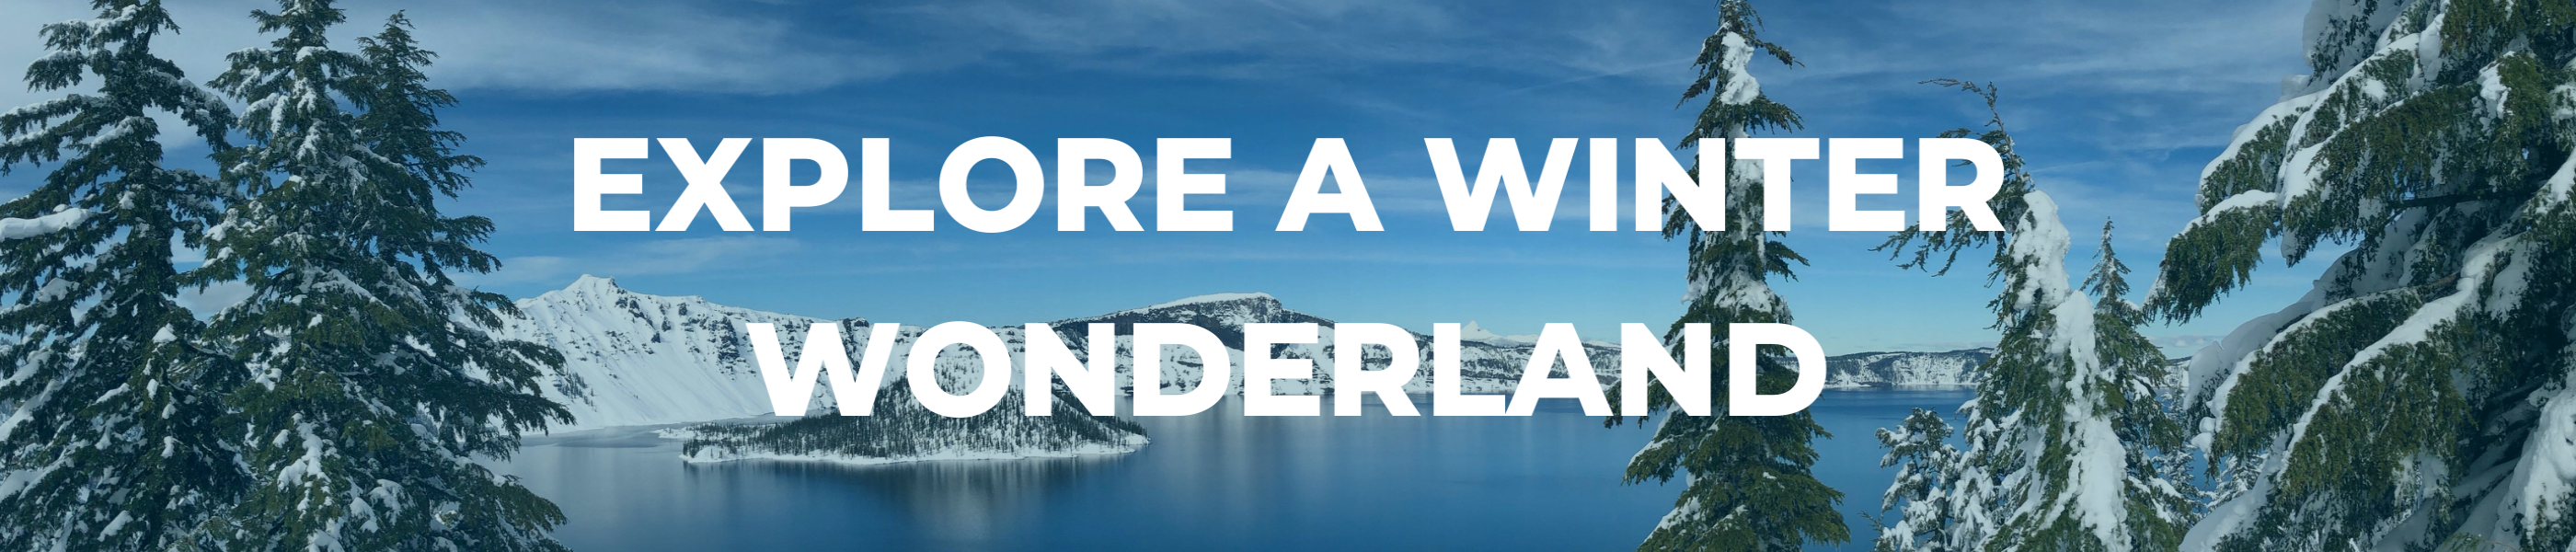 Explore a winter wonderland, crater lake, blog header